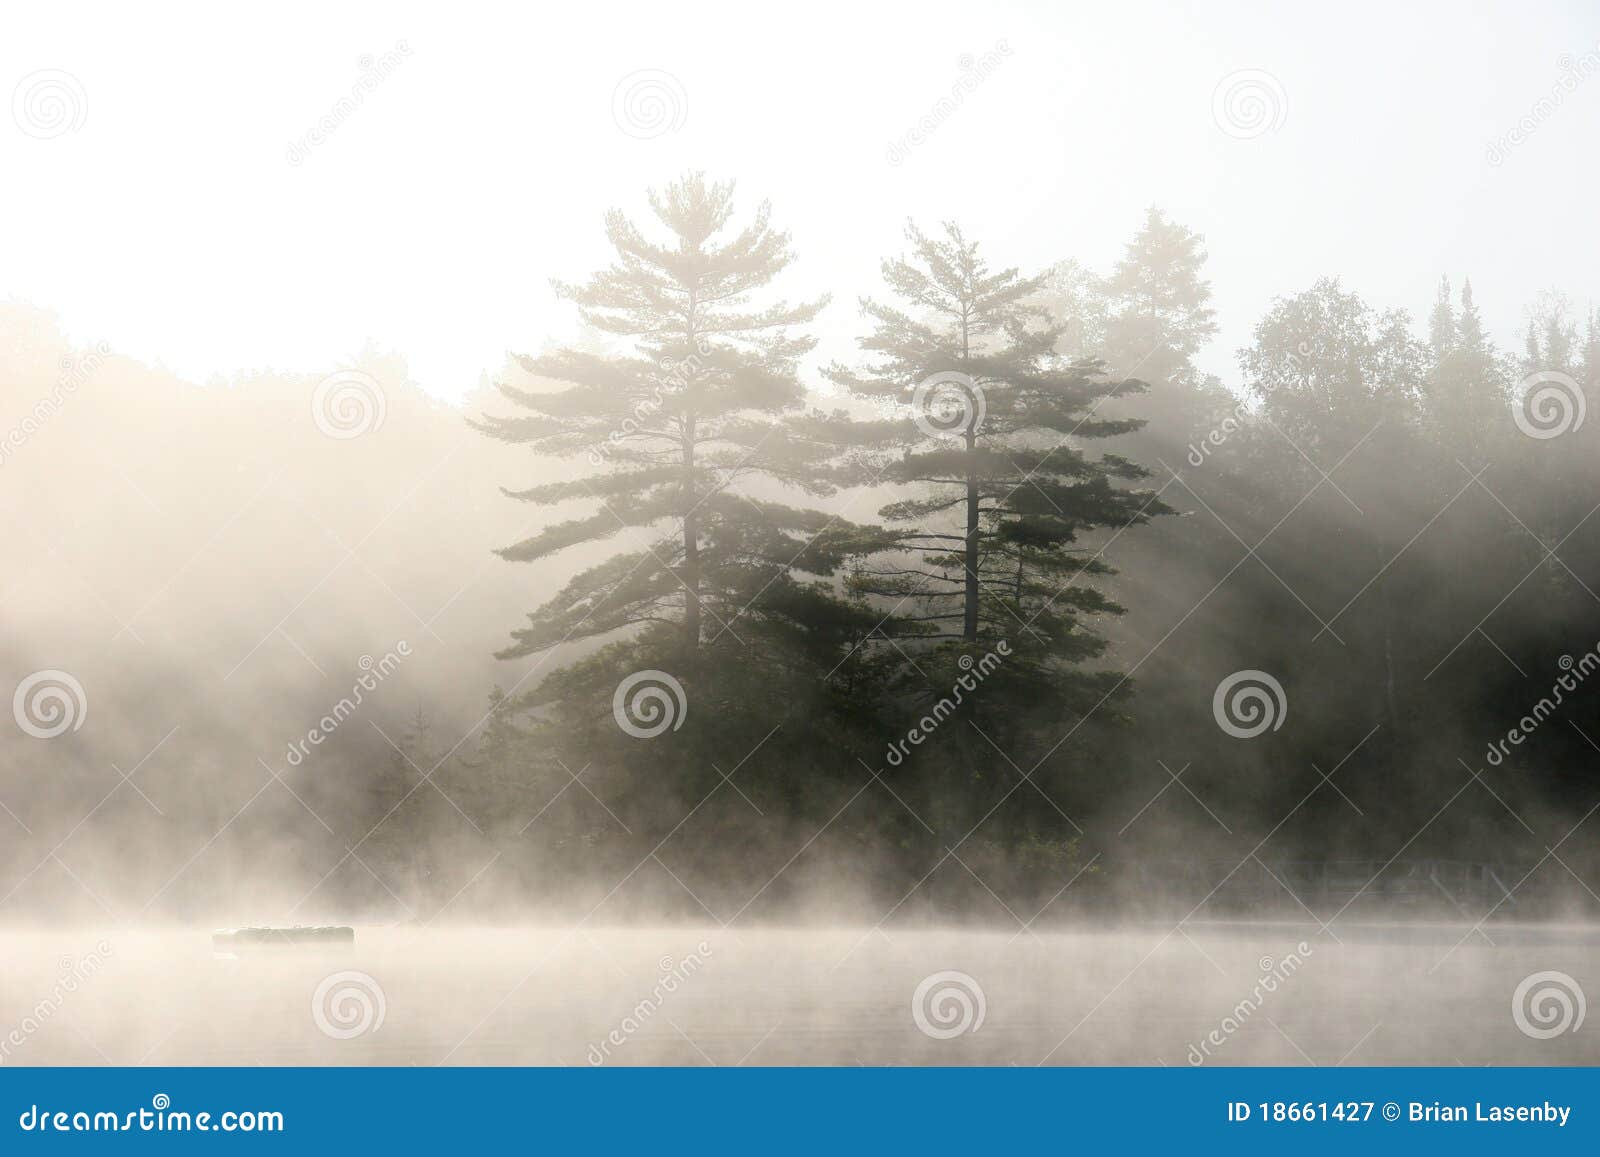 muskoka shoreline on a misty morning -